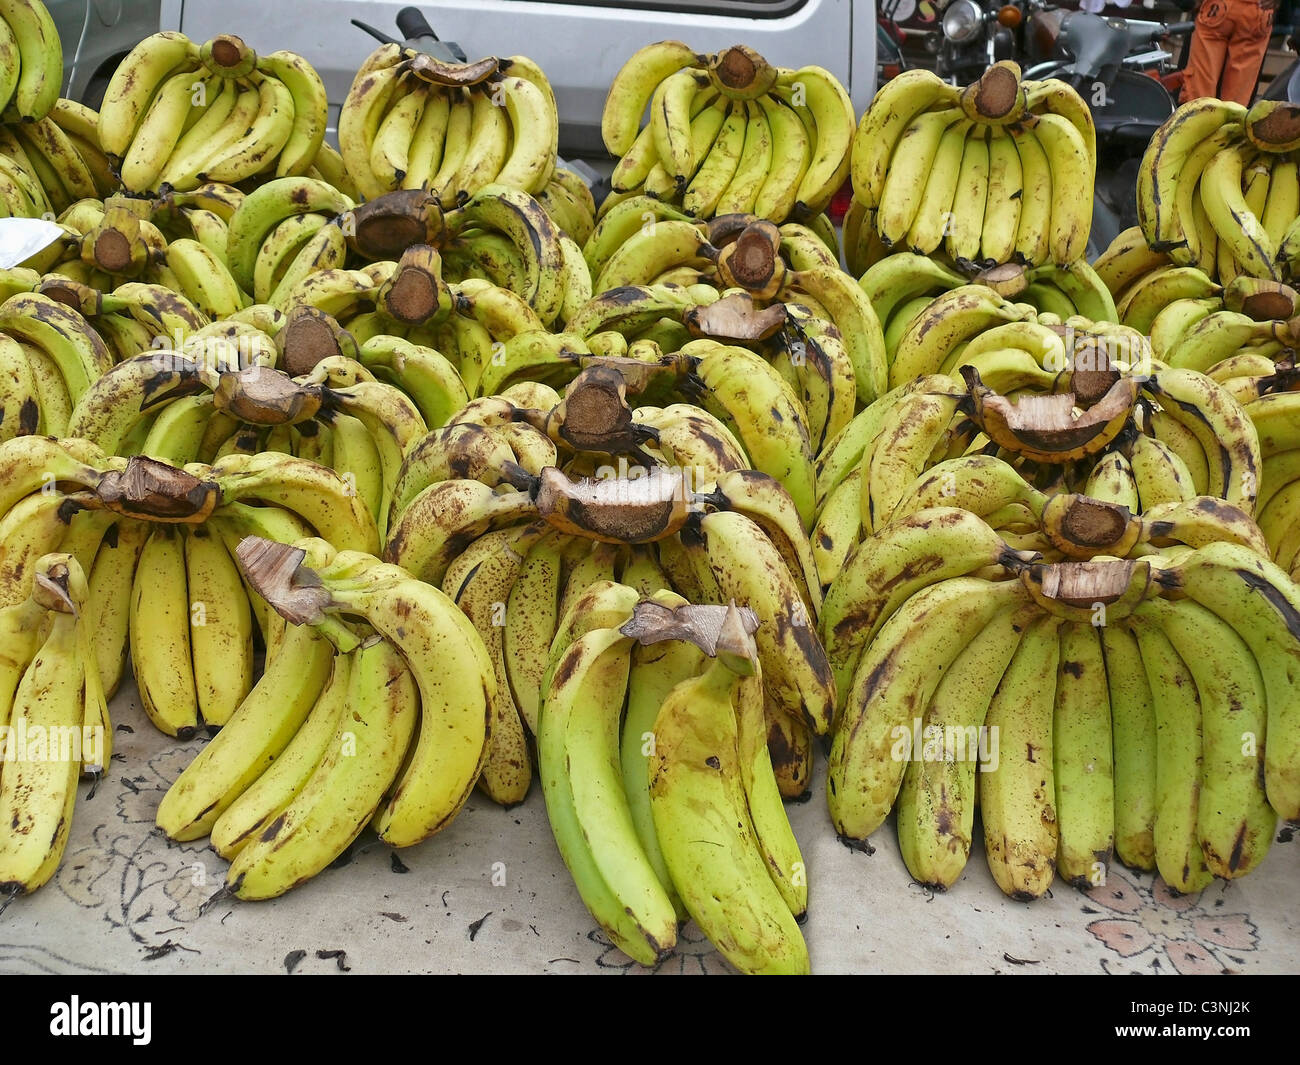 Bananas, Musa X paradisiaca L, Musaceae Stock Photo